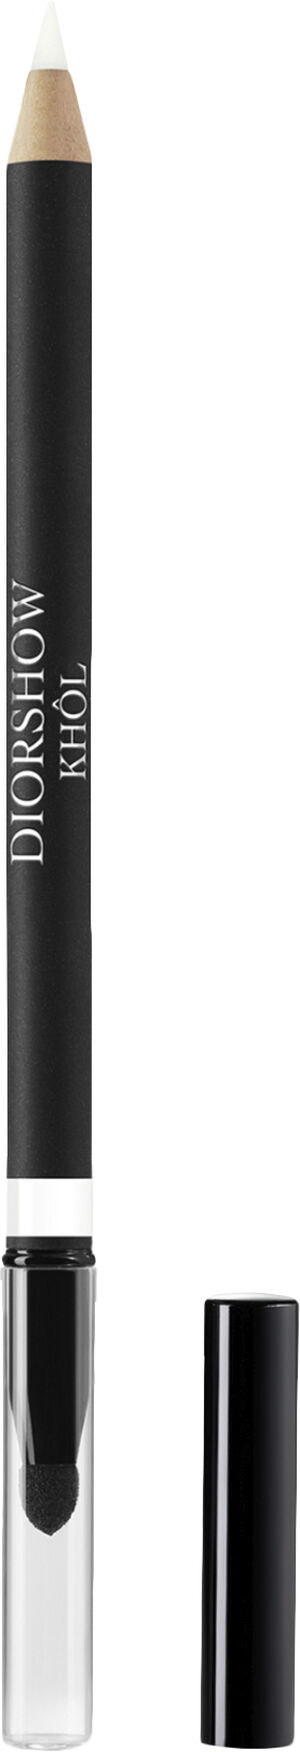 Diorshow Khôl High intensity pencil